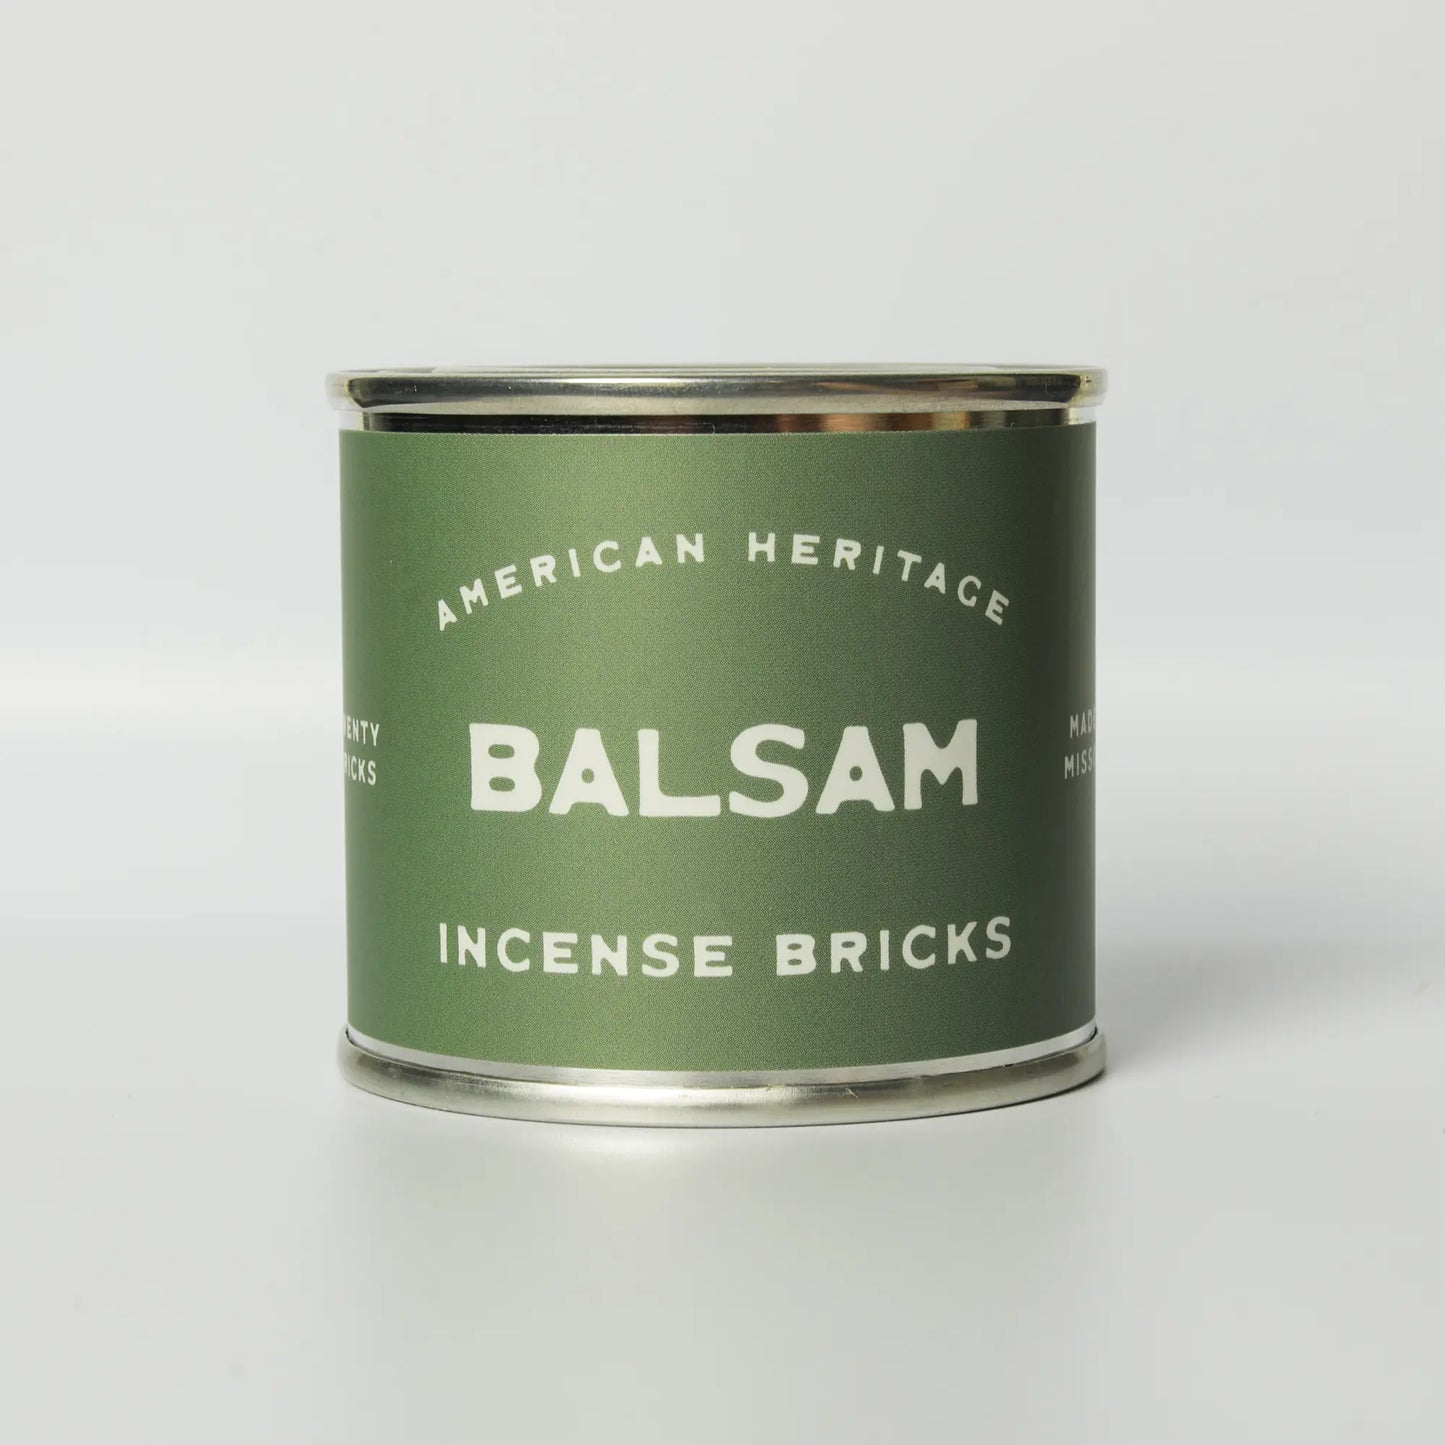 SALE - Incense Bricks - Balsam